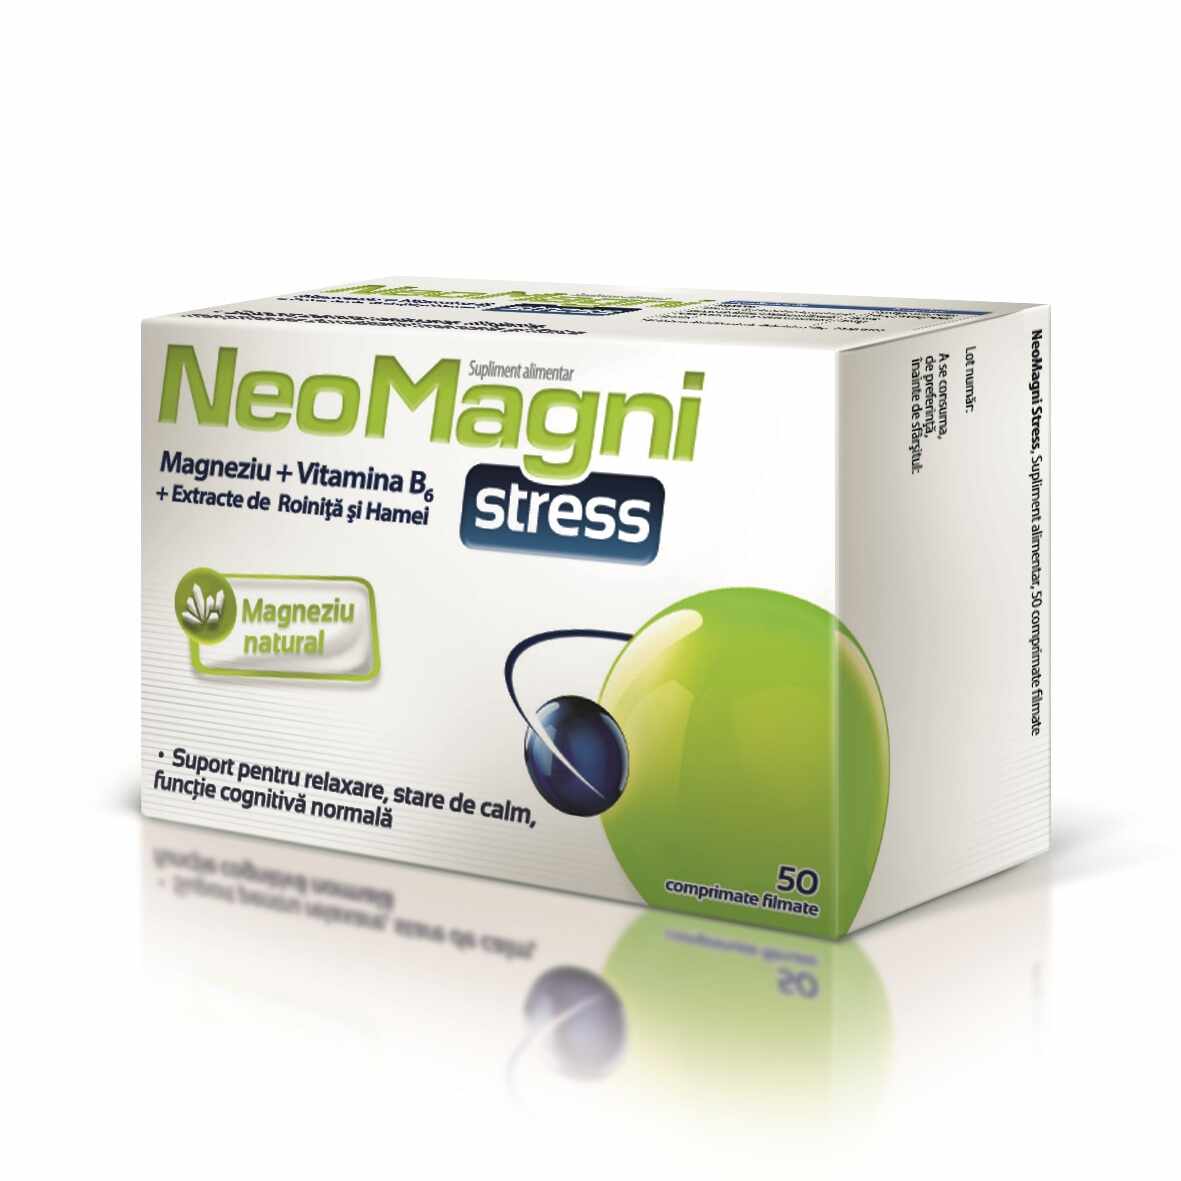 NeoMagni Stress, 50 comprimate, Aflofarm